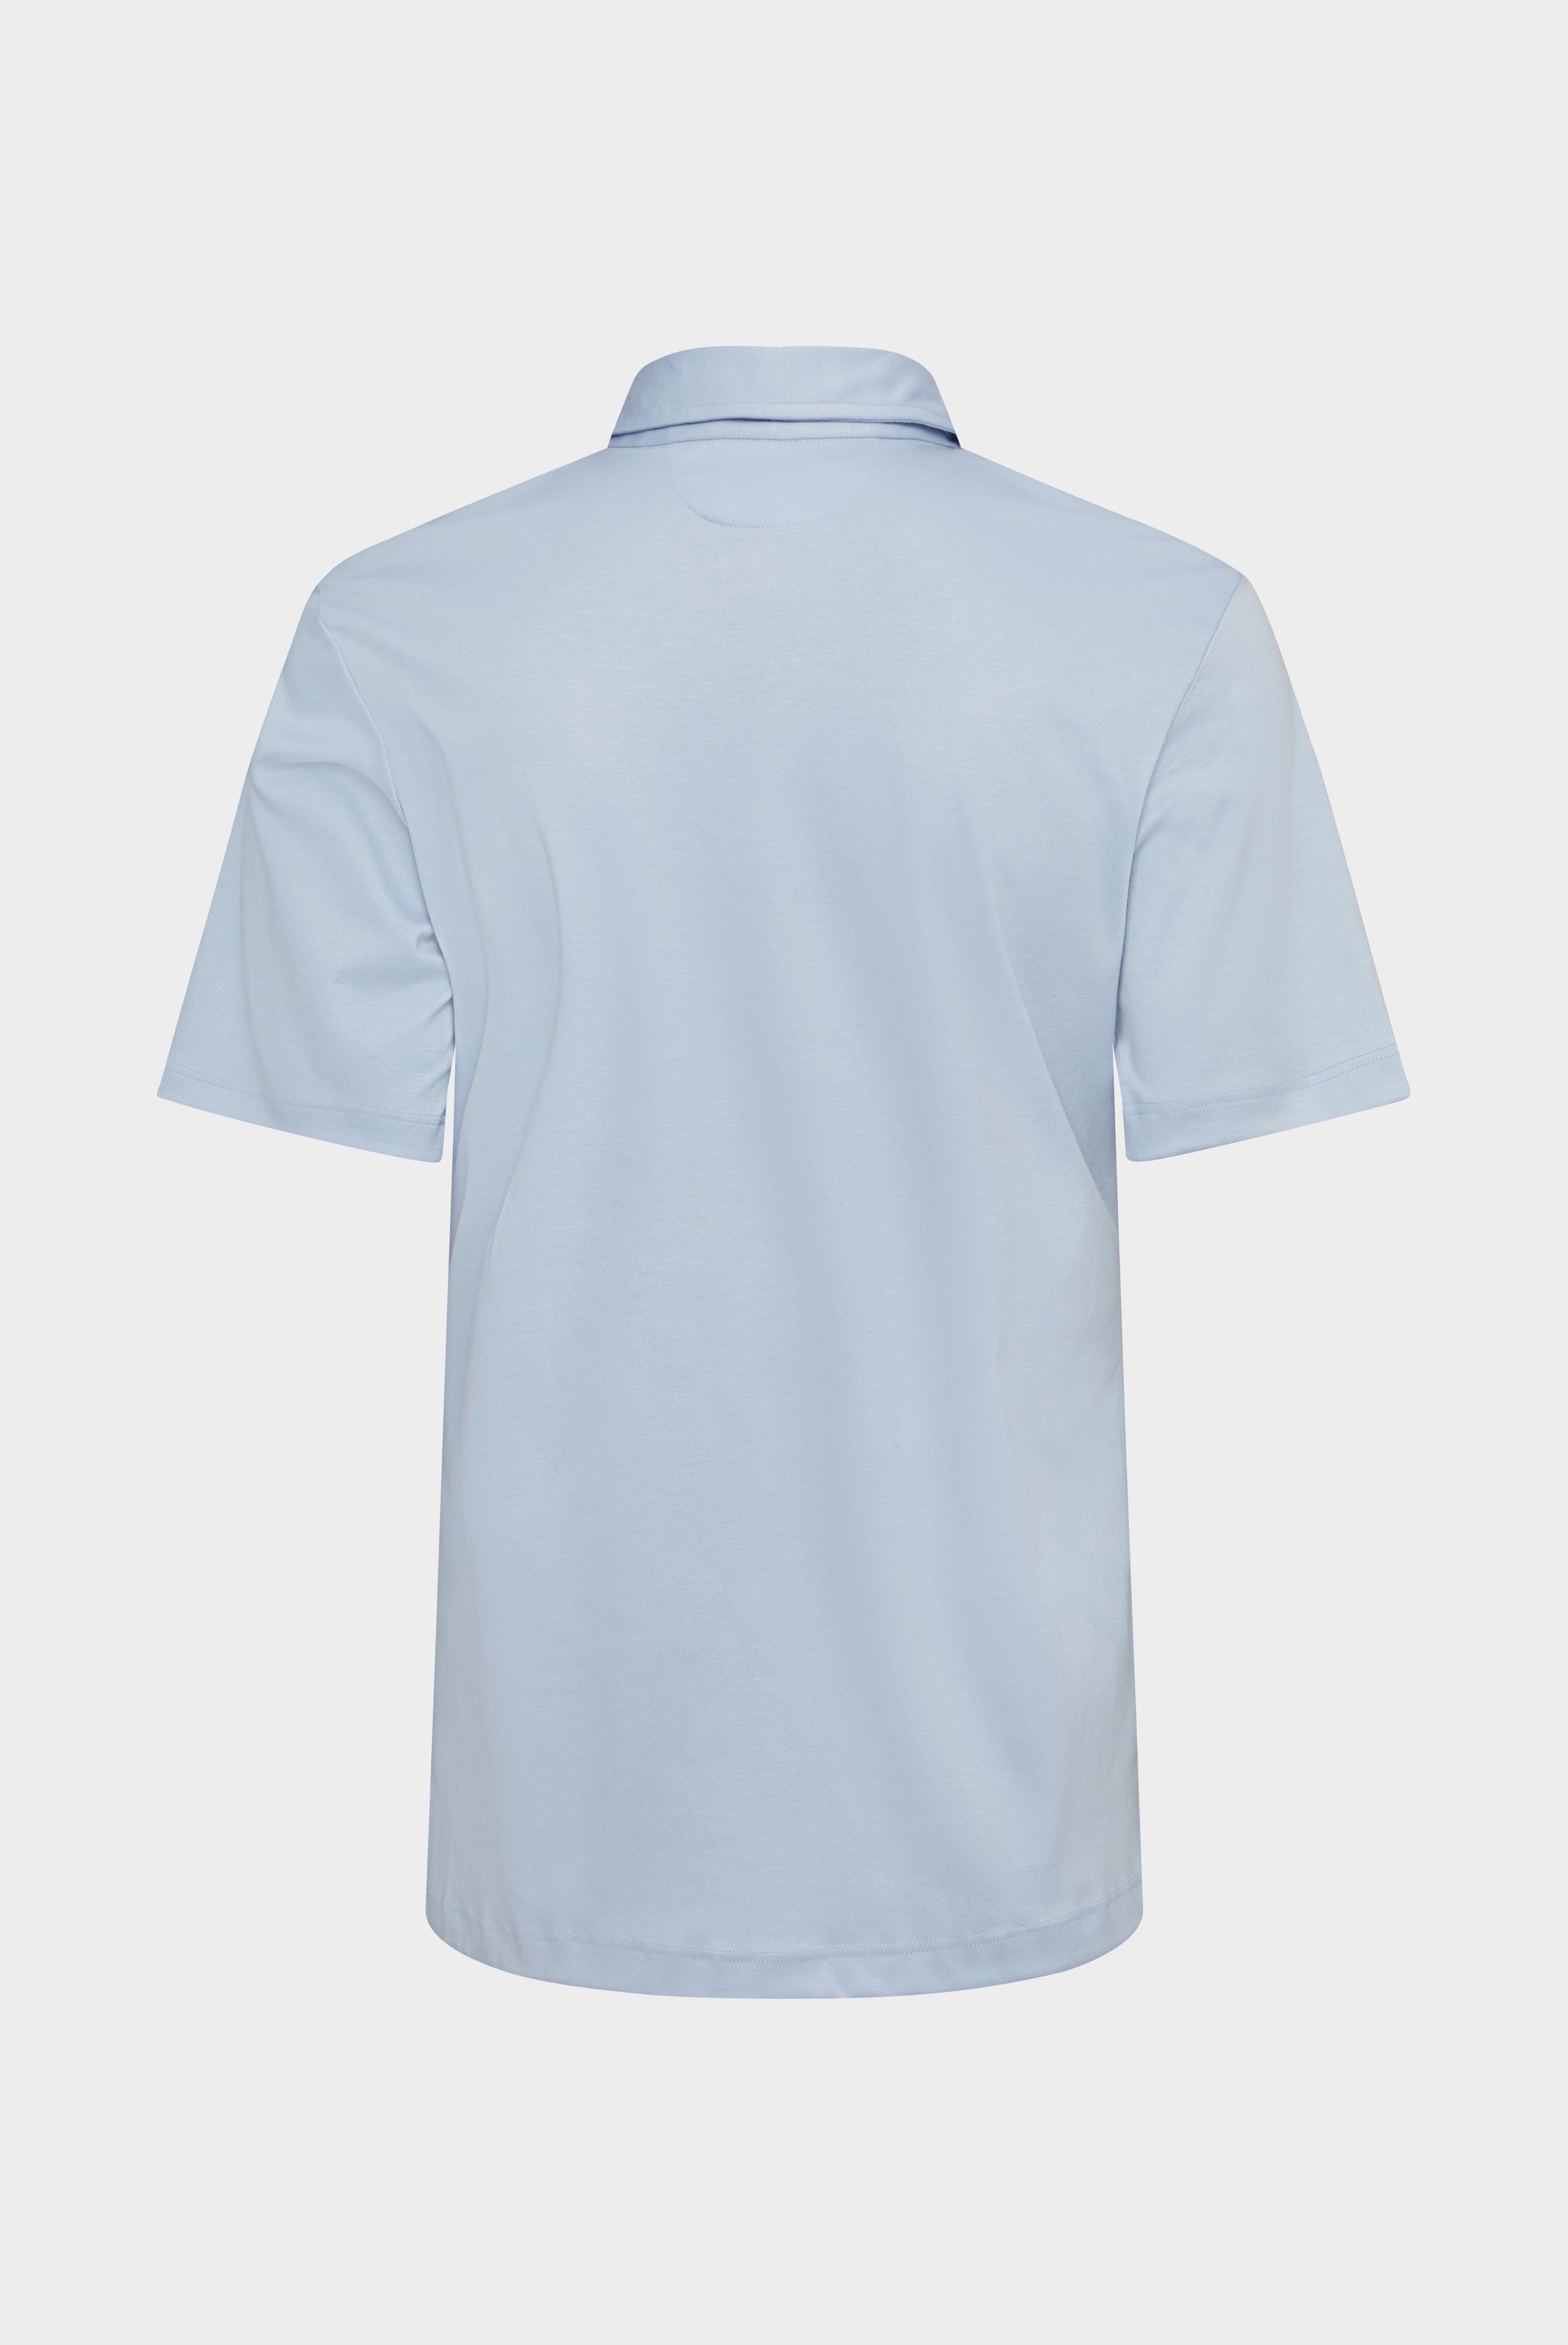 Tops & T-Shirts+Classic Swiss Cotton Polo Shirt+05.2523.07.180031.720.36